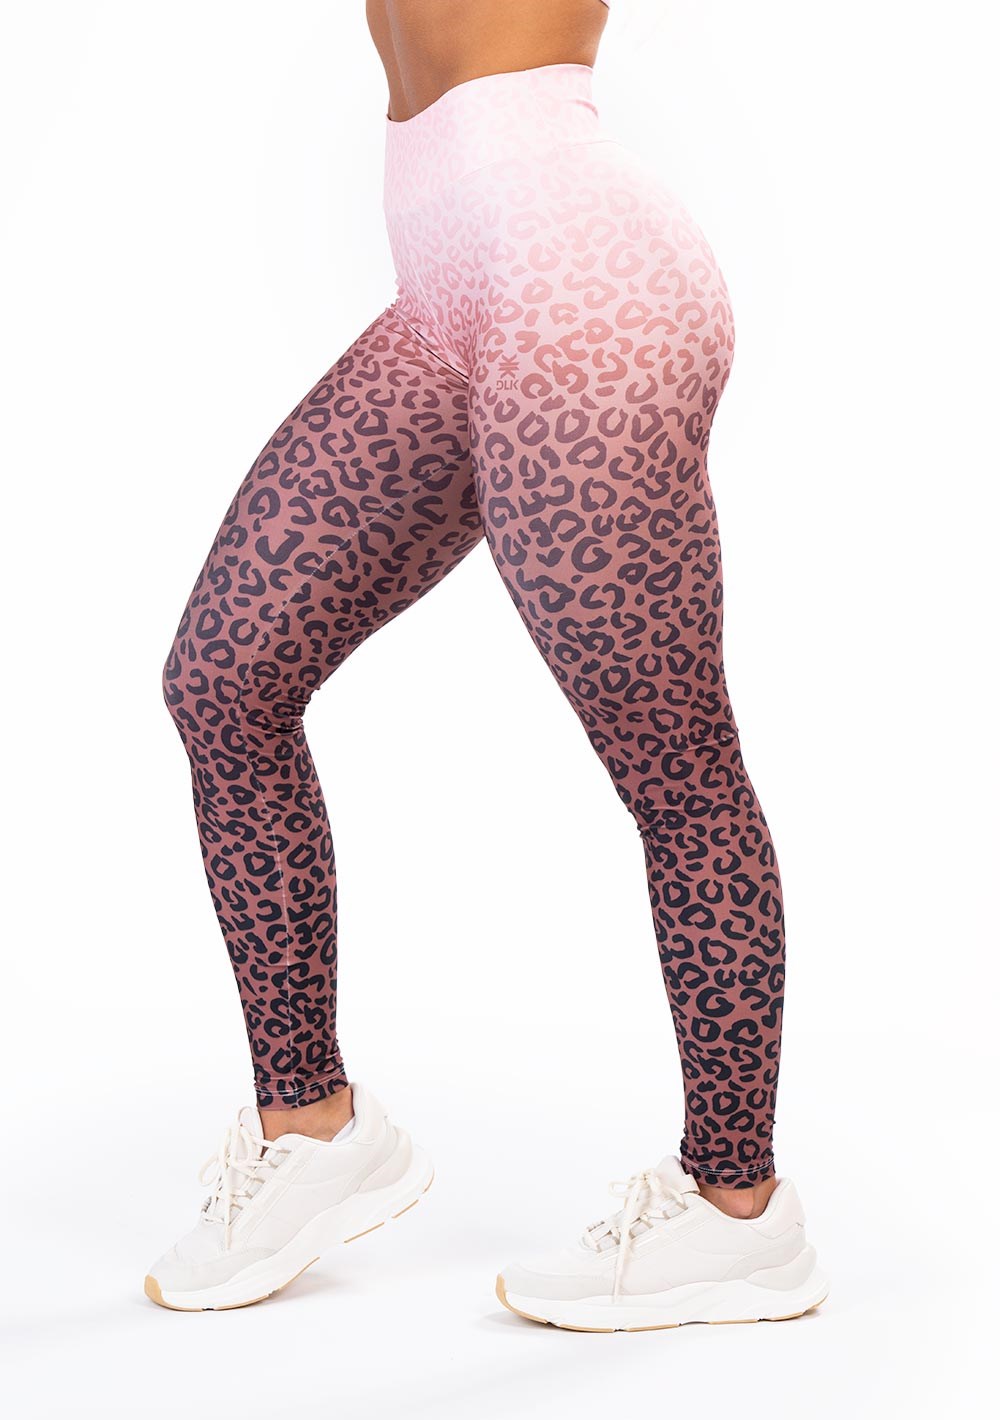 Legging fitness feminina new printed estampada onça marrom